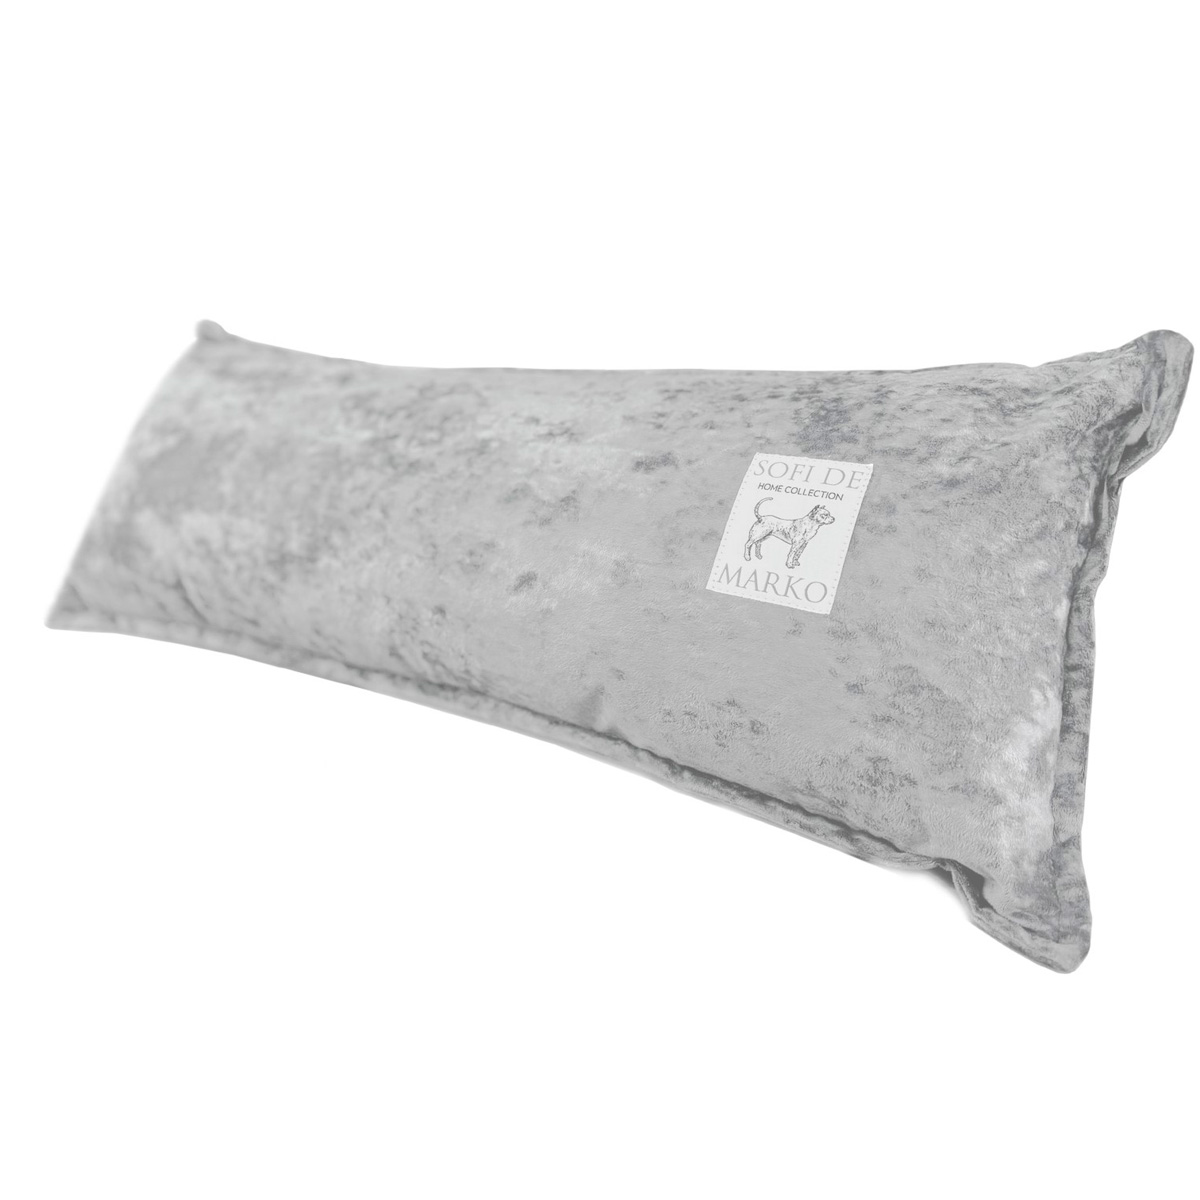 Подушка декоративная Sofi de Marko Брайан 32x90см, цвет светлый серый декоративная круглая подушка сидушка joyarty